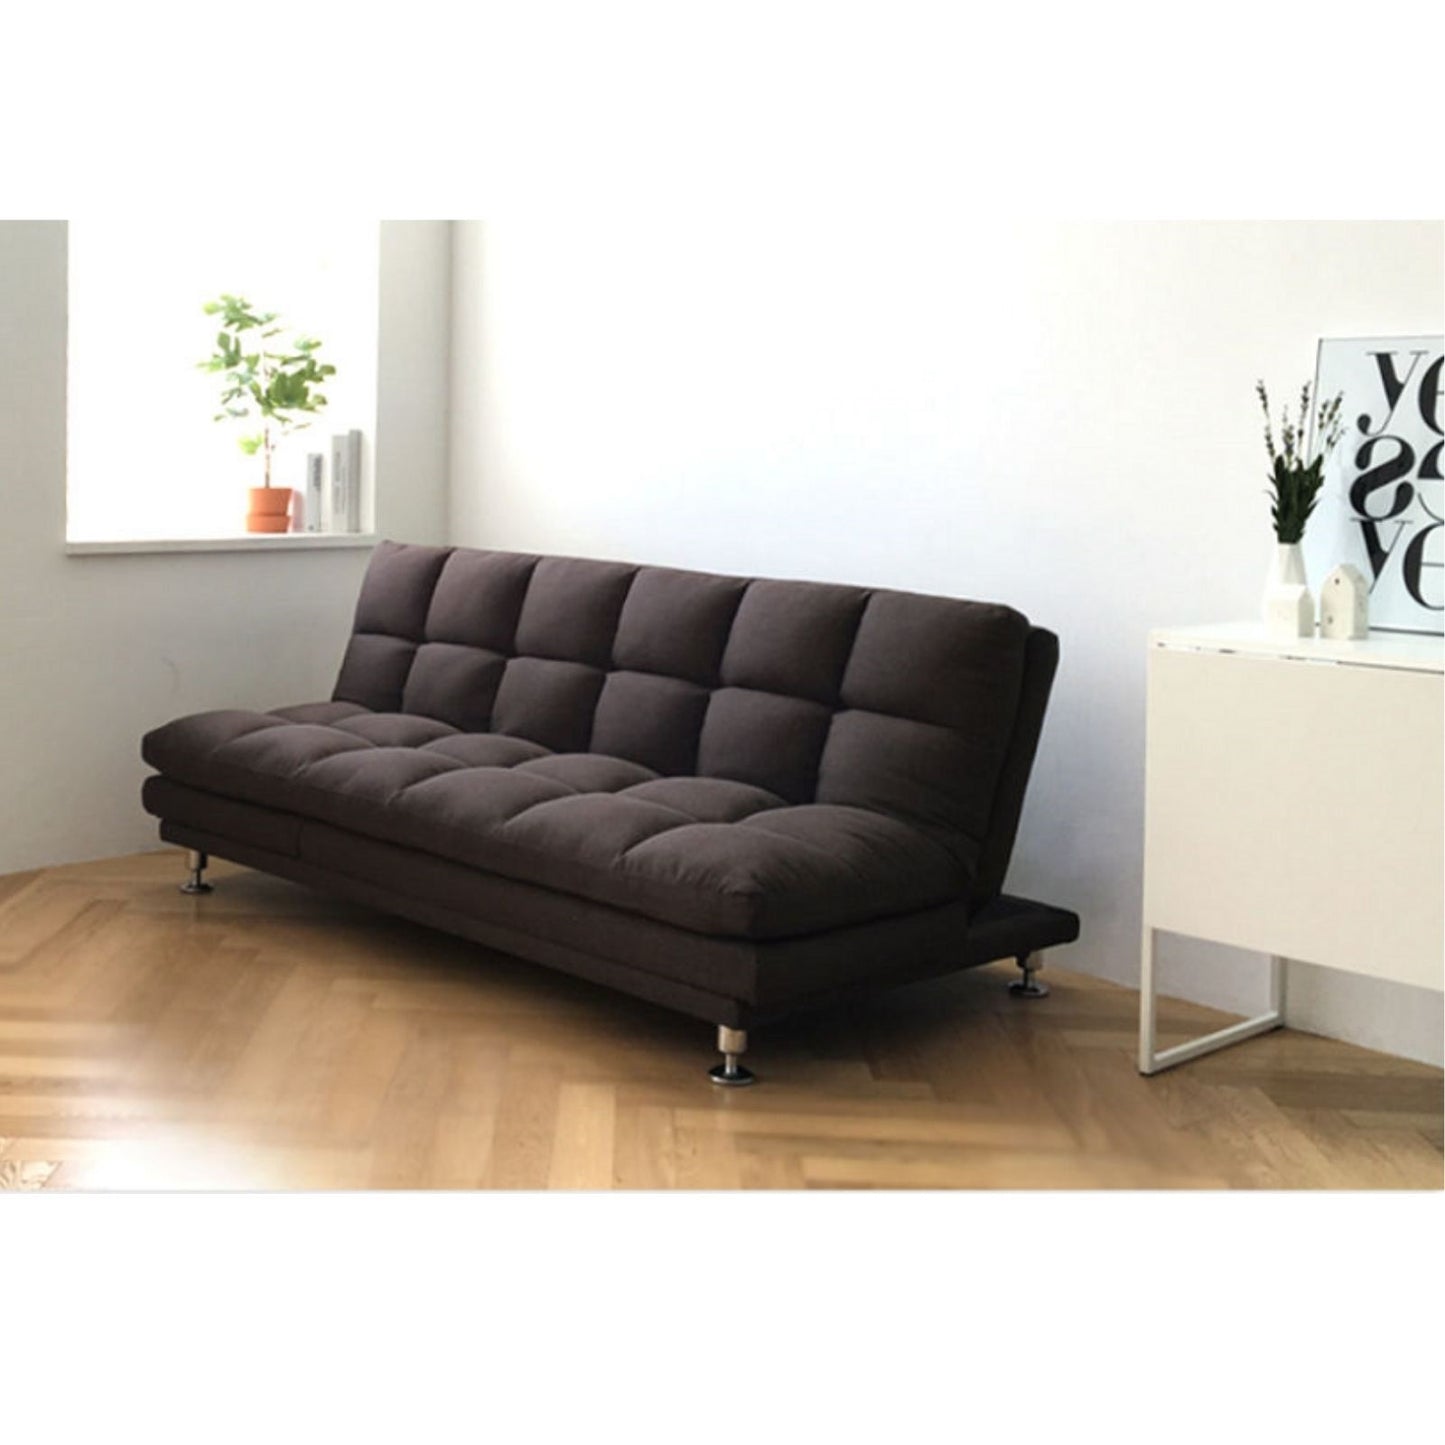 Viola 3 Seater Upholstered Sofa Bed